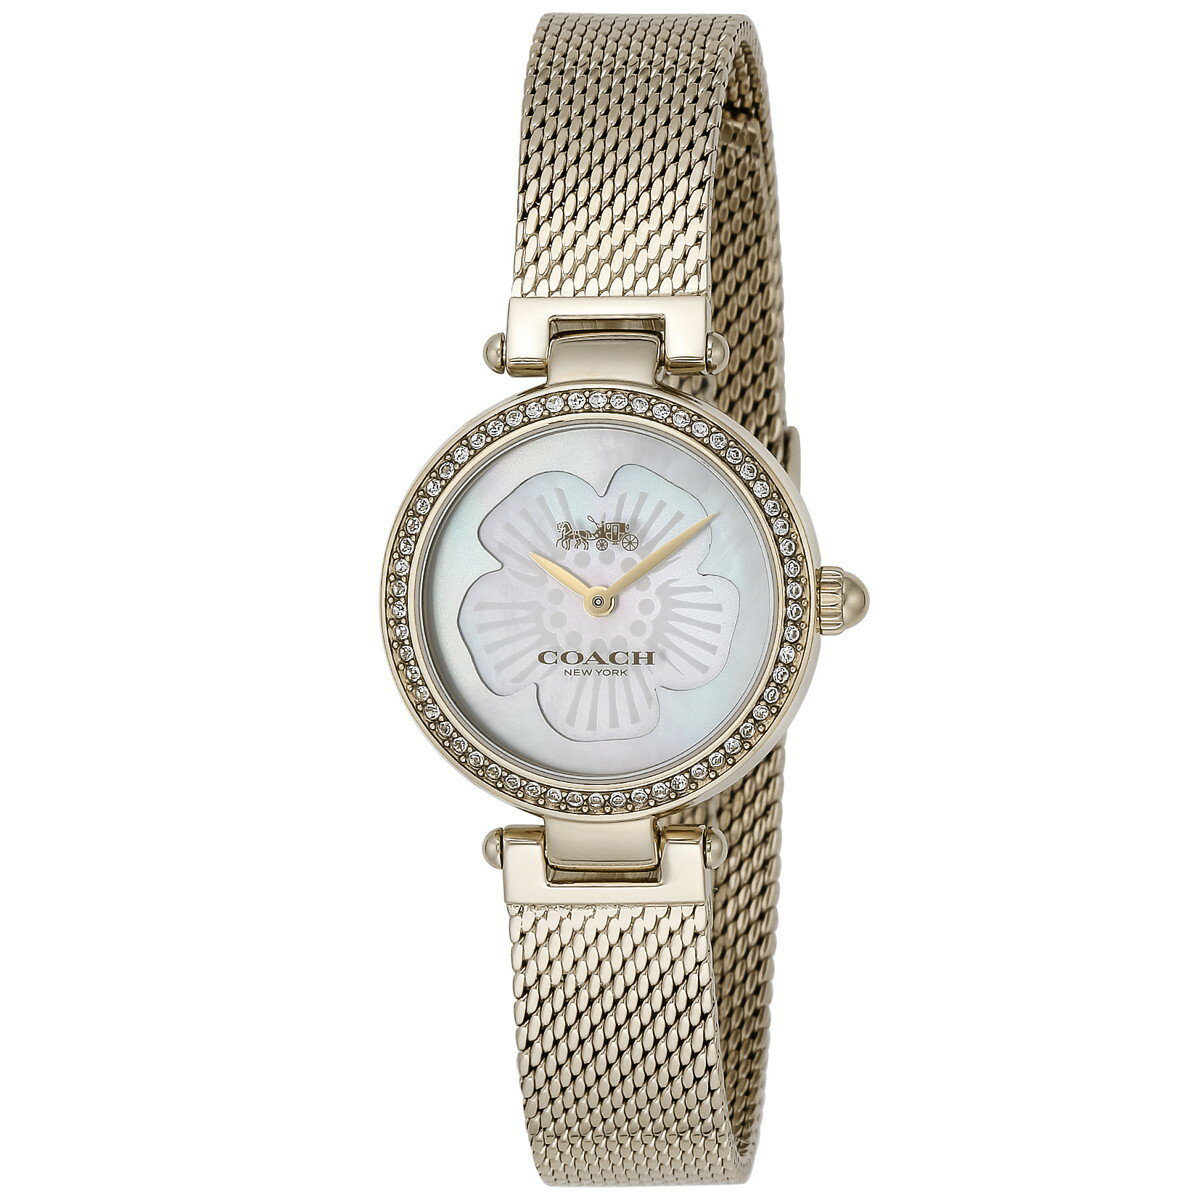 COACH 腕時計 レディース PARK ホワイトパール SS(YGPVD) SS(YGPVD) 14503512